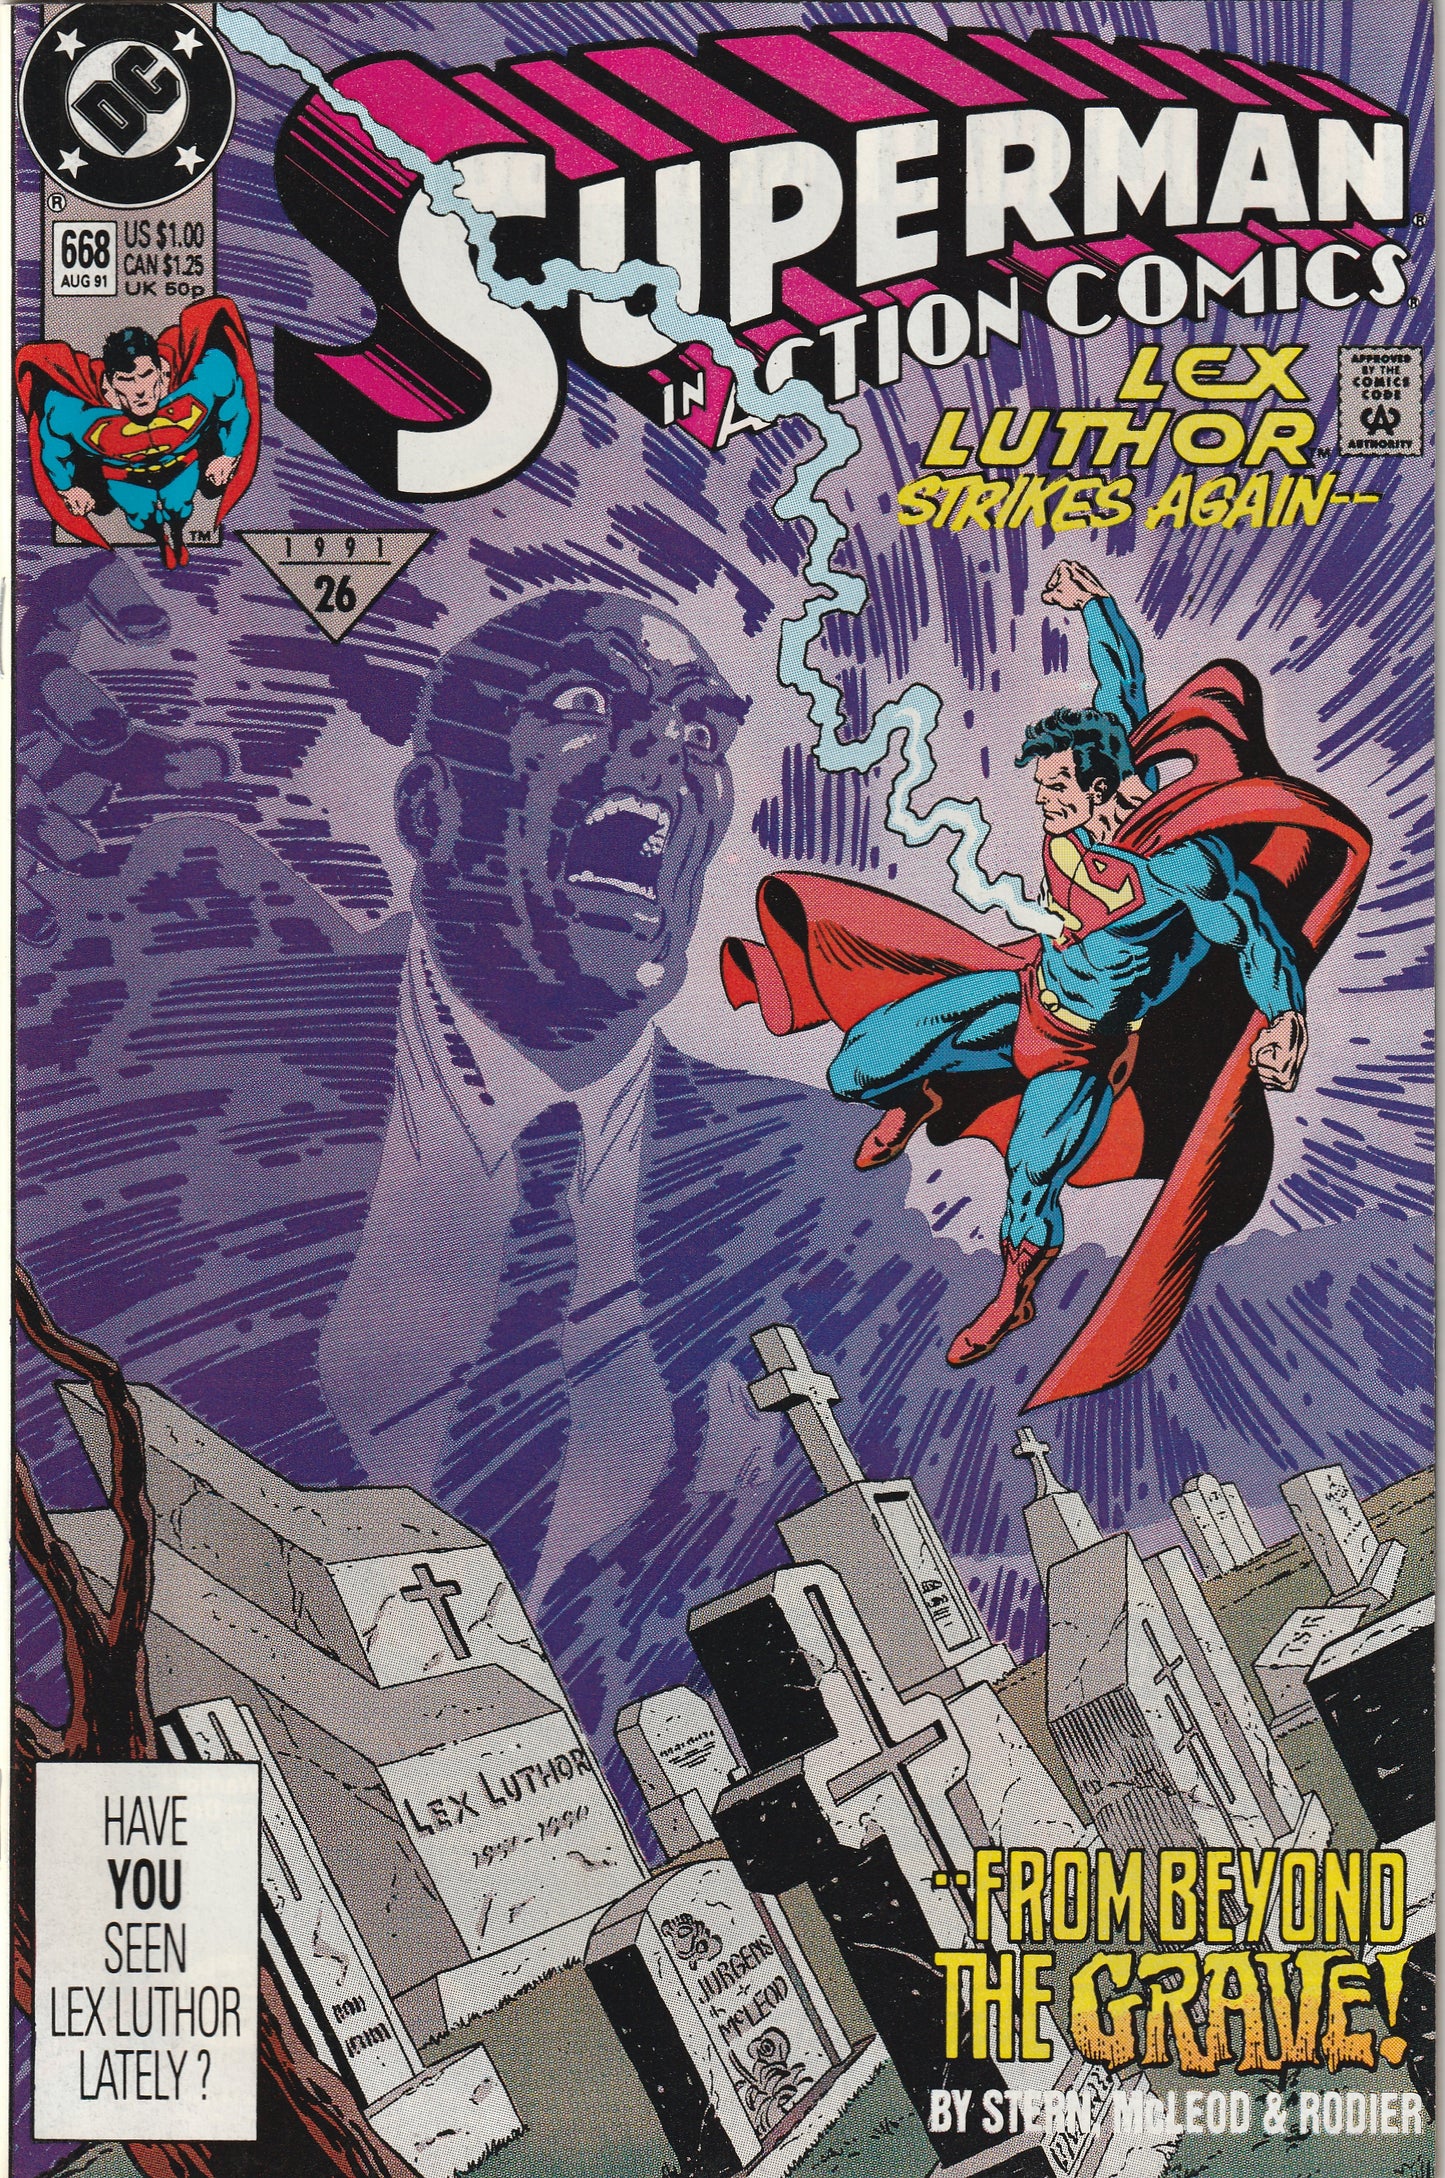 Action Comics #668 (1991)